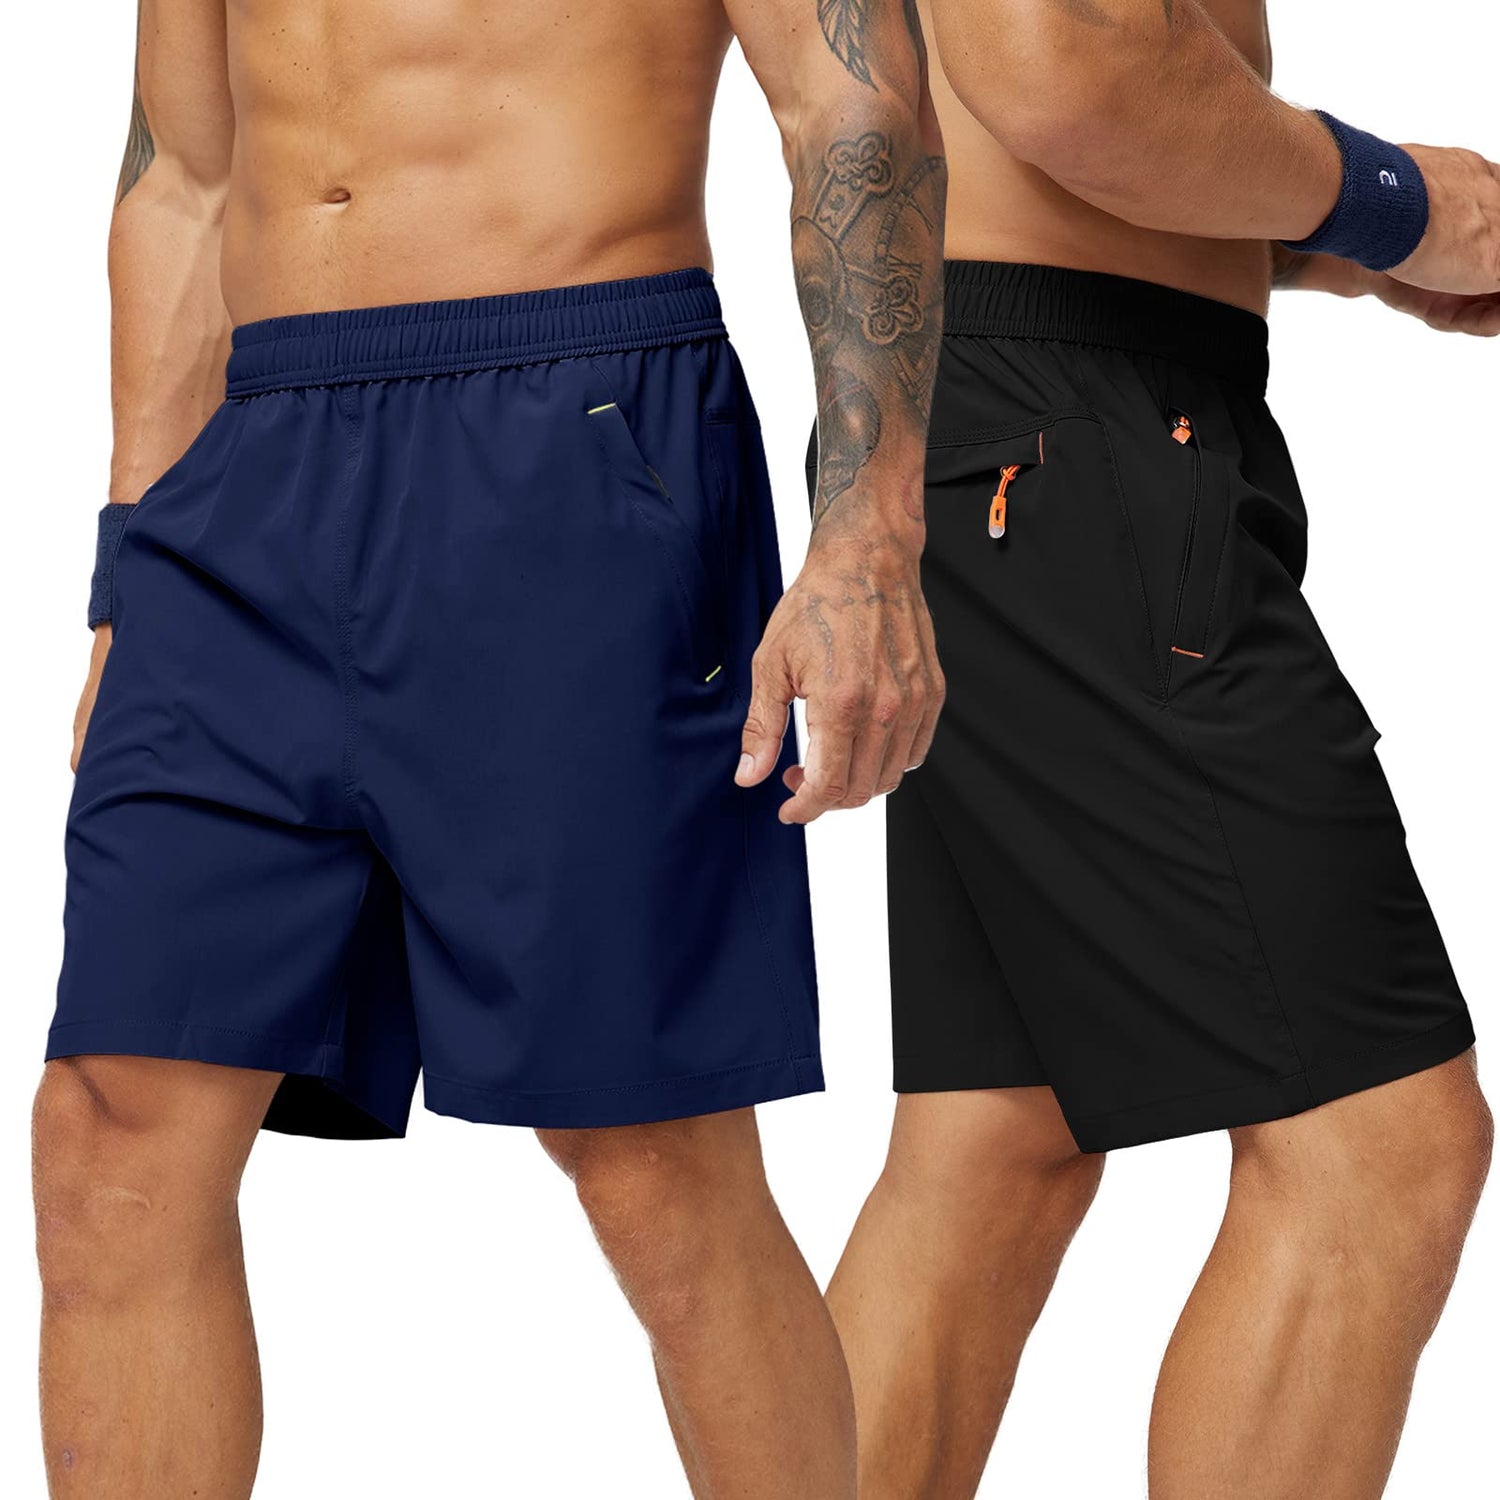 Men Quick Dry Running Shorts with Zipper Pocket Elastic Waist 7 Inch Men&